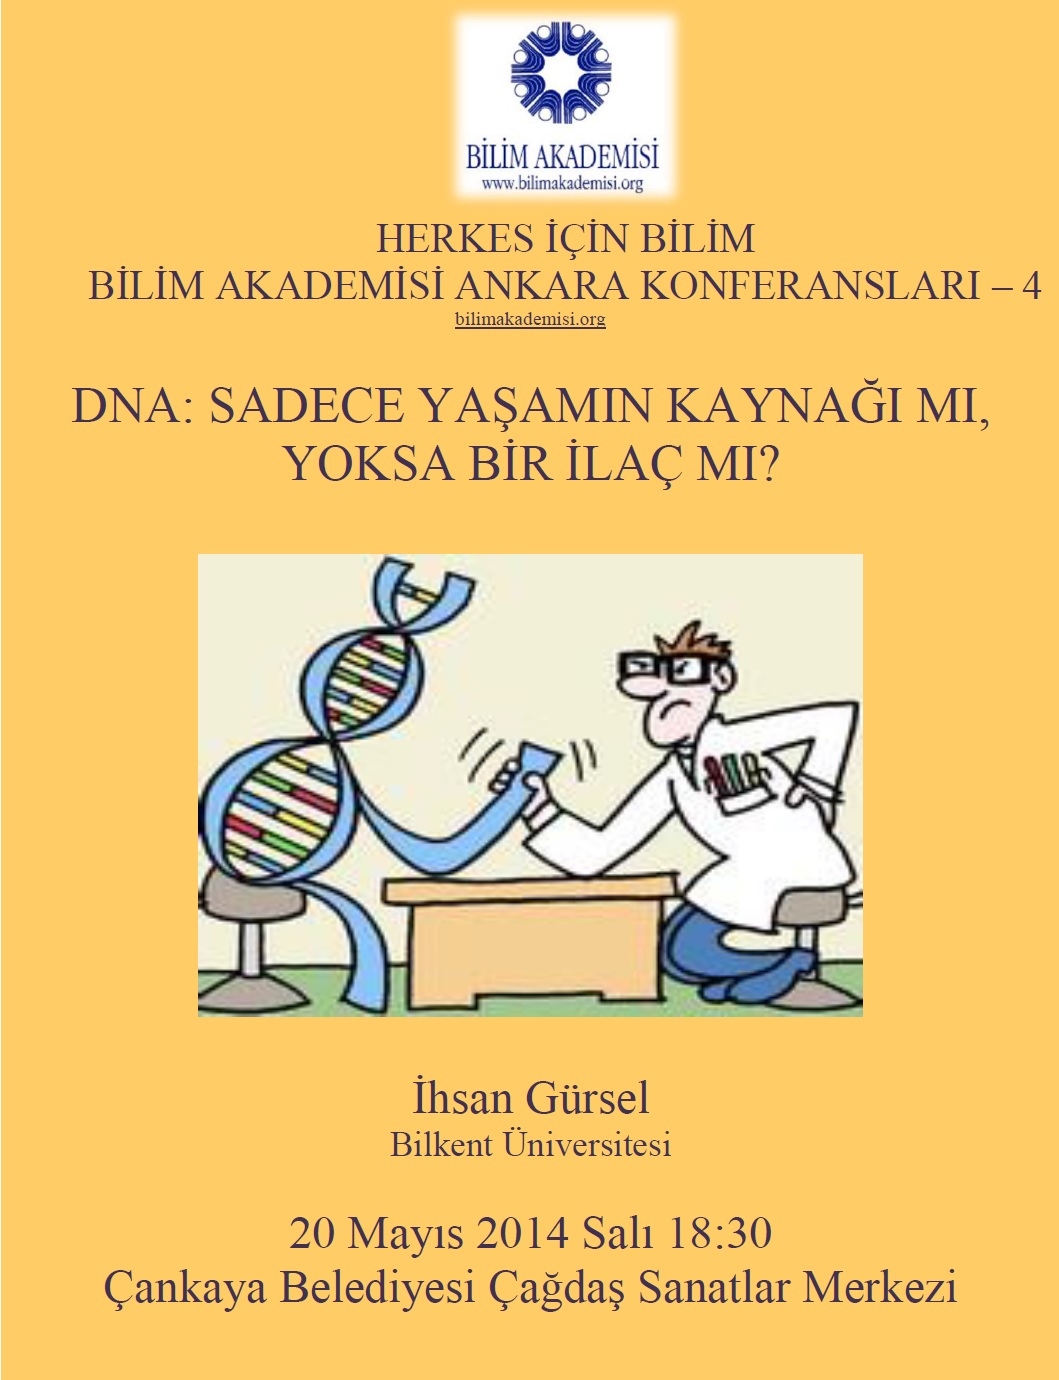 DNA: The Origin of Life, or Medication? – Speaker: İhsan Gürsel